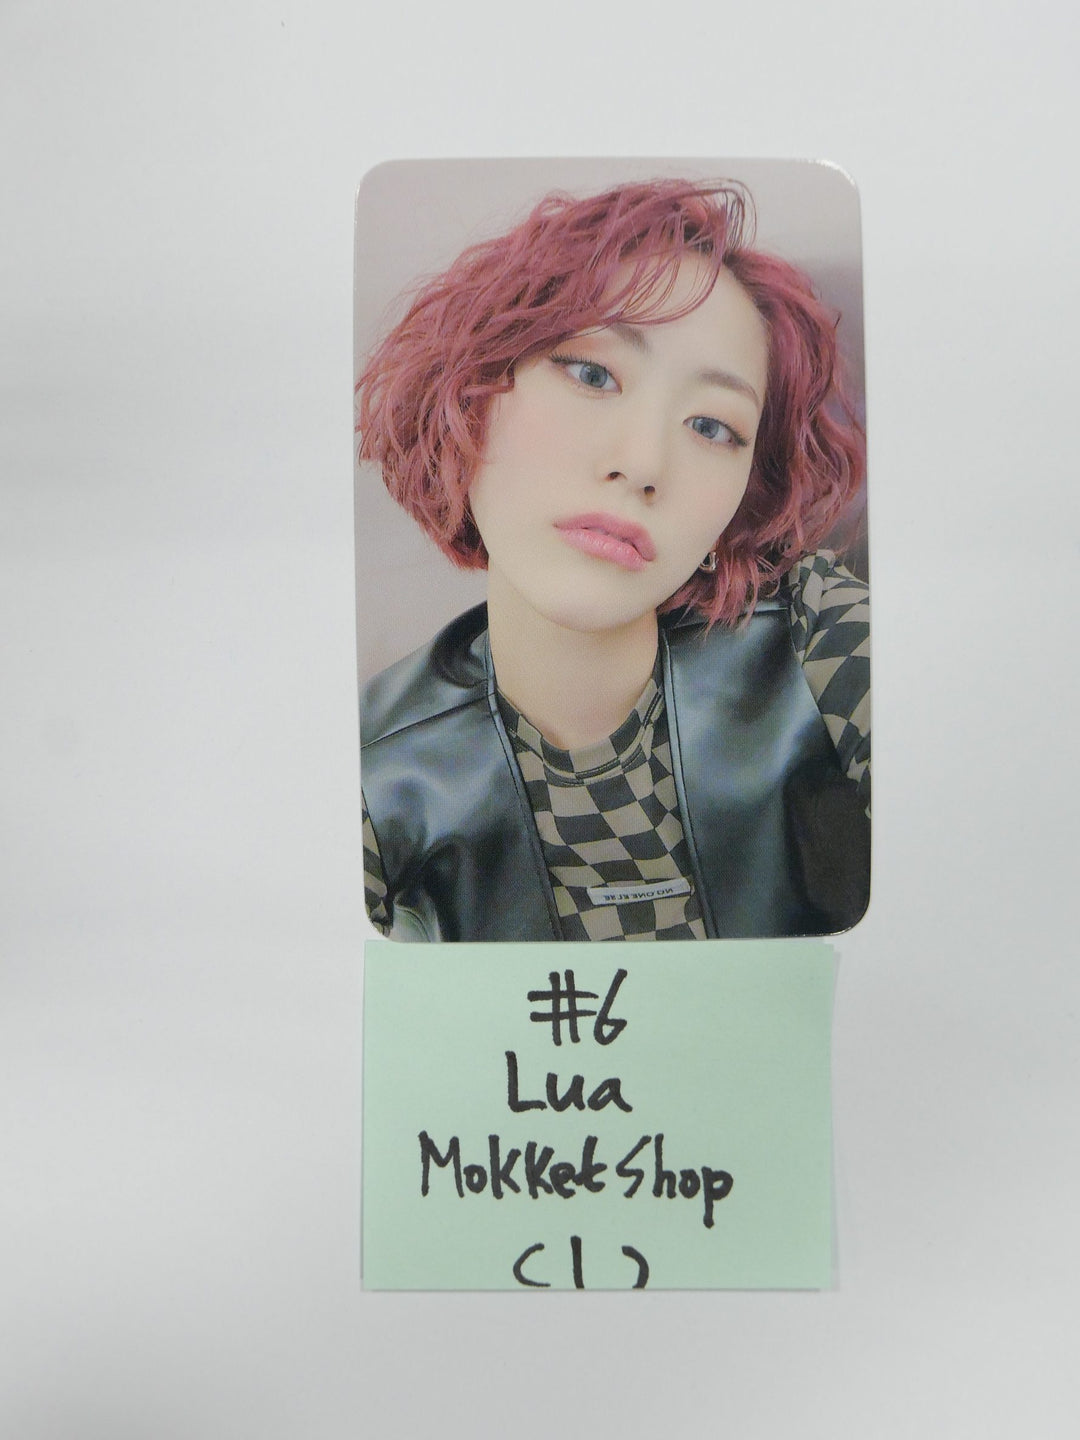 Weki Meki ‘I AM ME.’- Mokket Shop Fan Sign Event Photocard